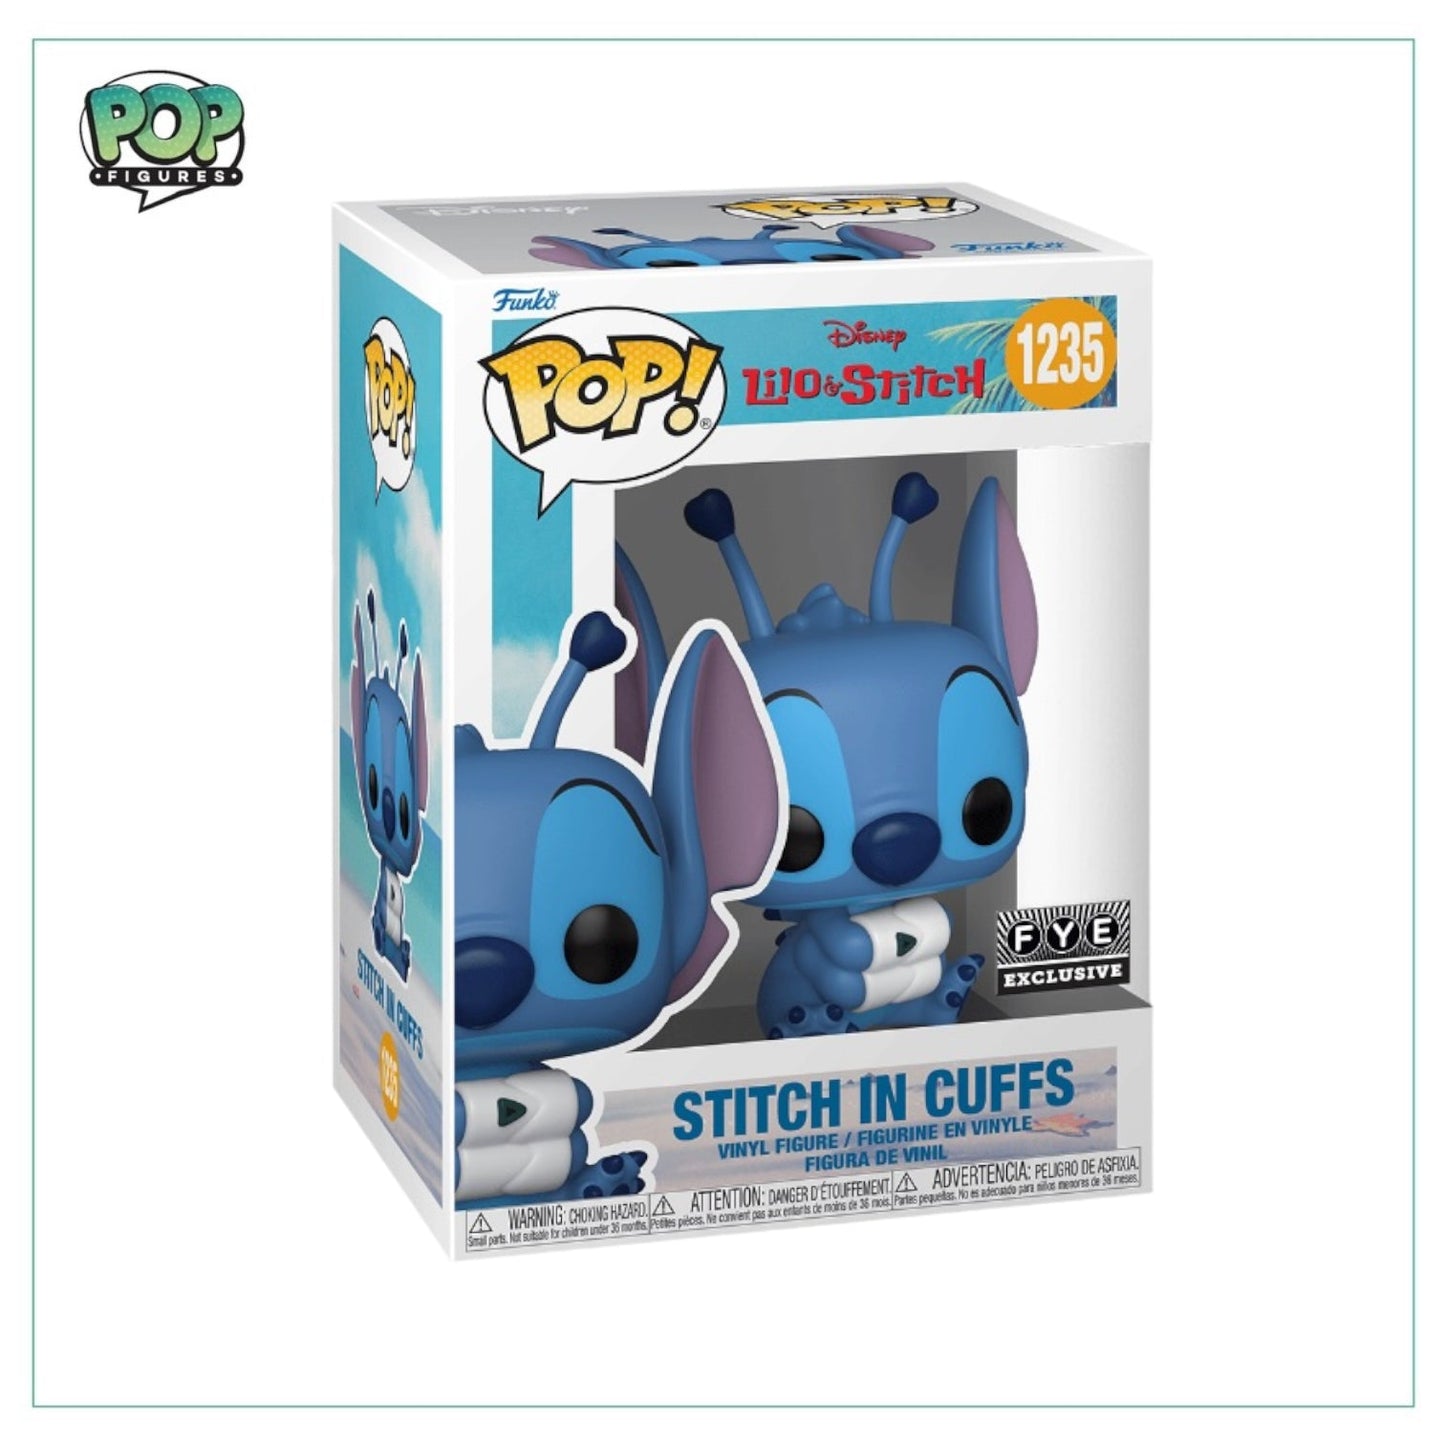 Stitch in Cuffs #1235 Funko Pop! - Lilo and Stitch - FYE Exclusive - Angry Cat